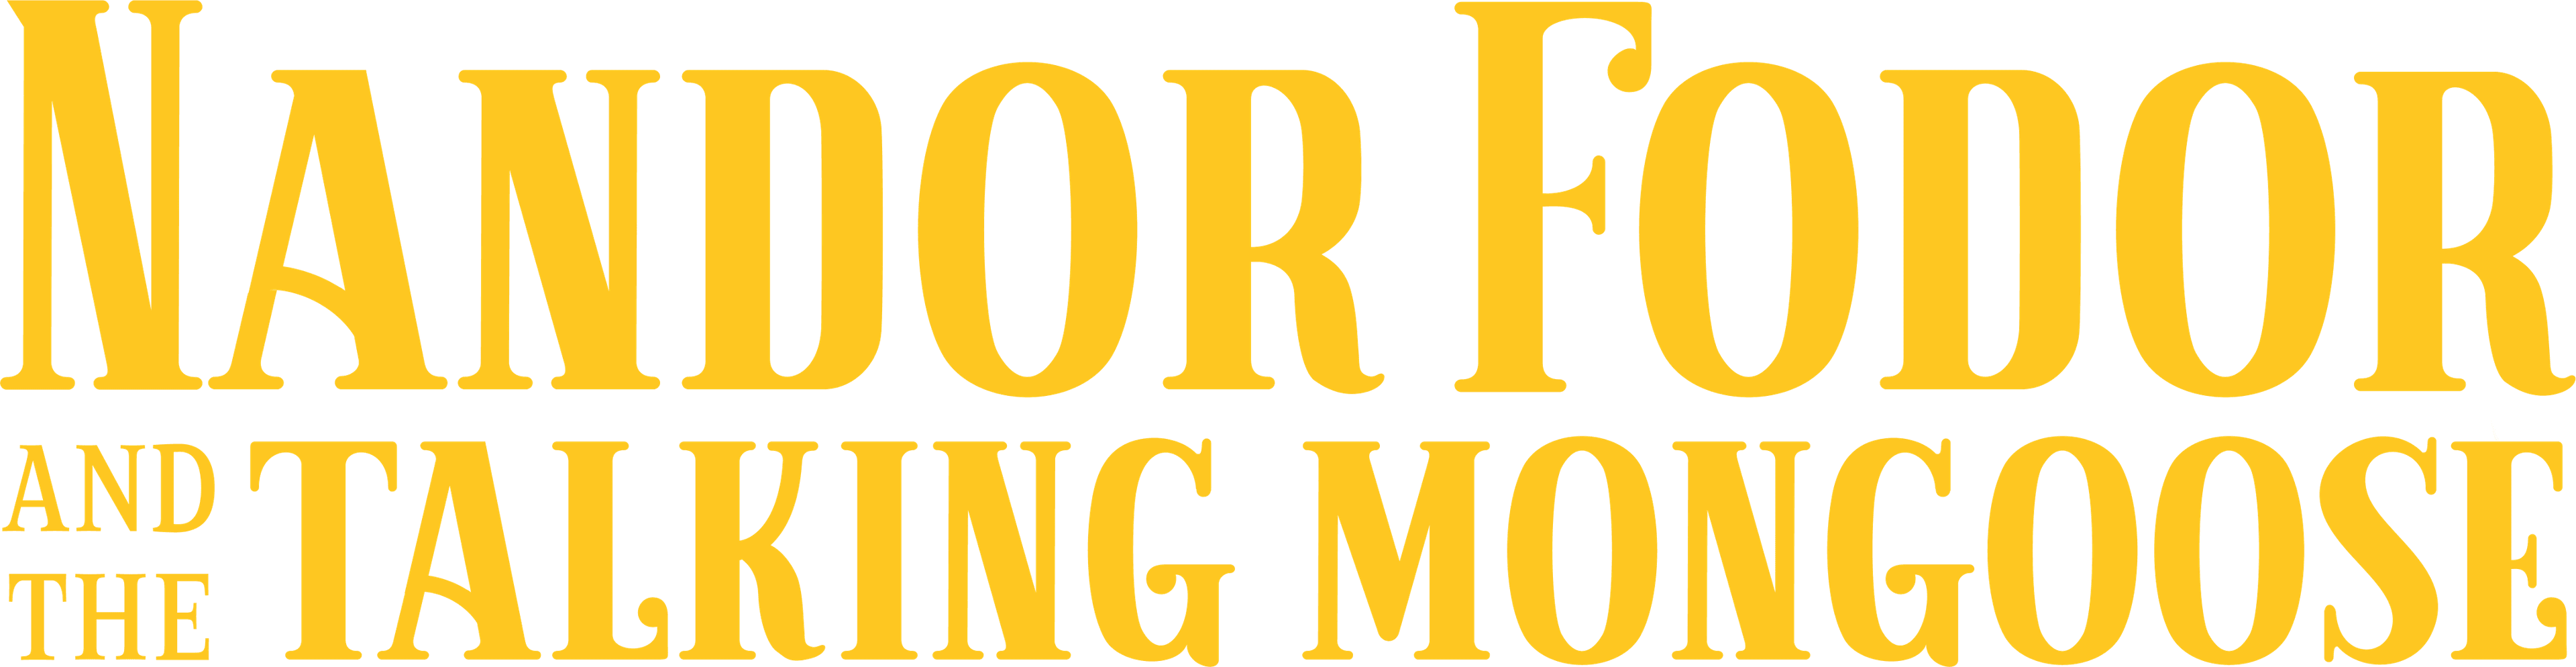 Nandor Fodor and the Talking Mongoose logo